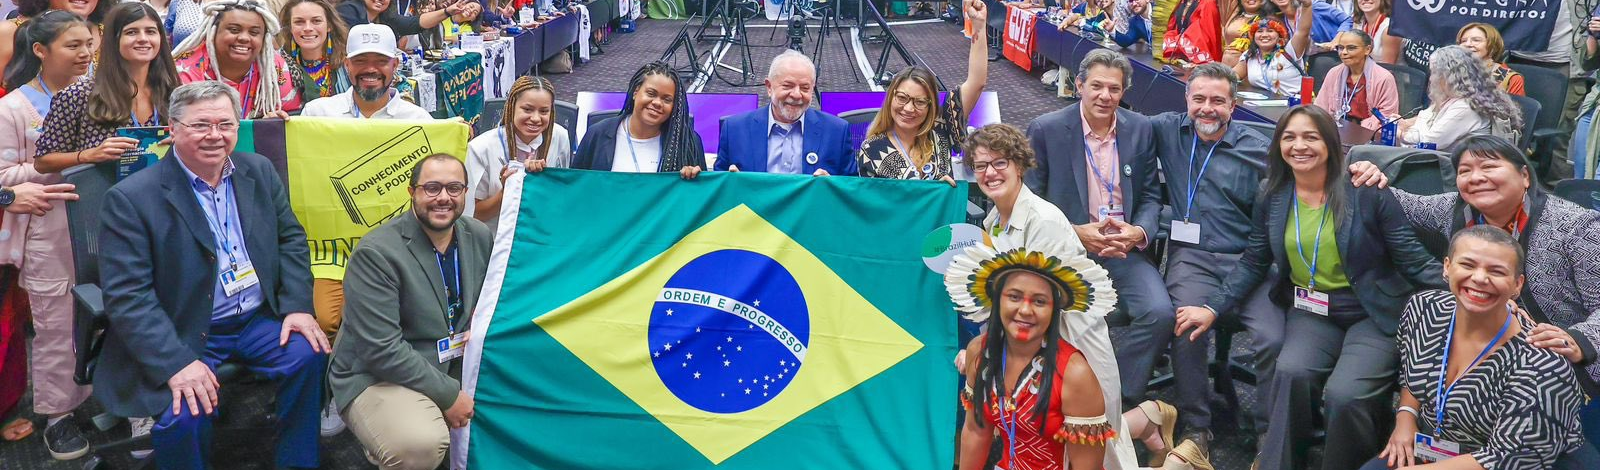 Para enfrentar mercado, partido militar e extrema-direita, Lula precisa do apoio popular